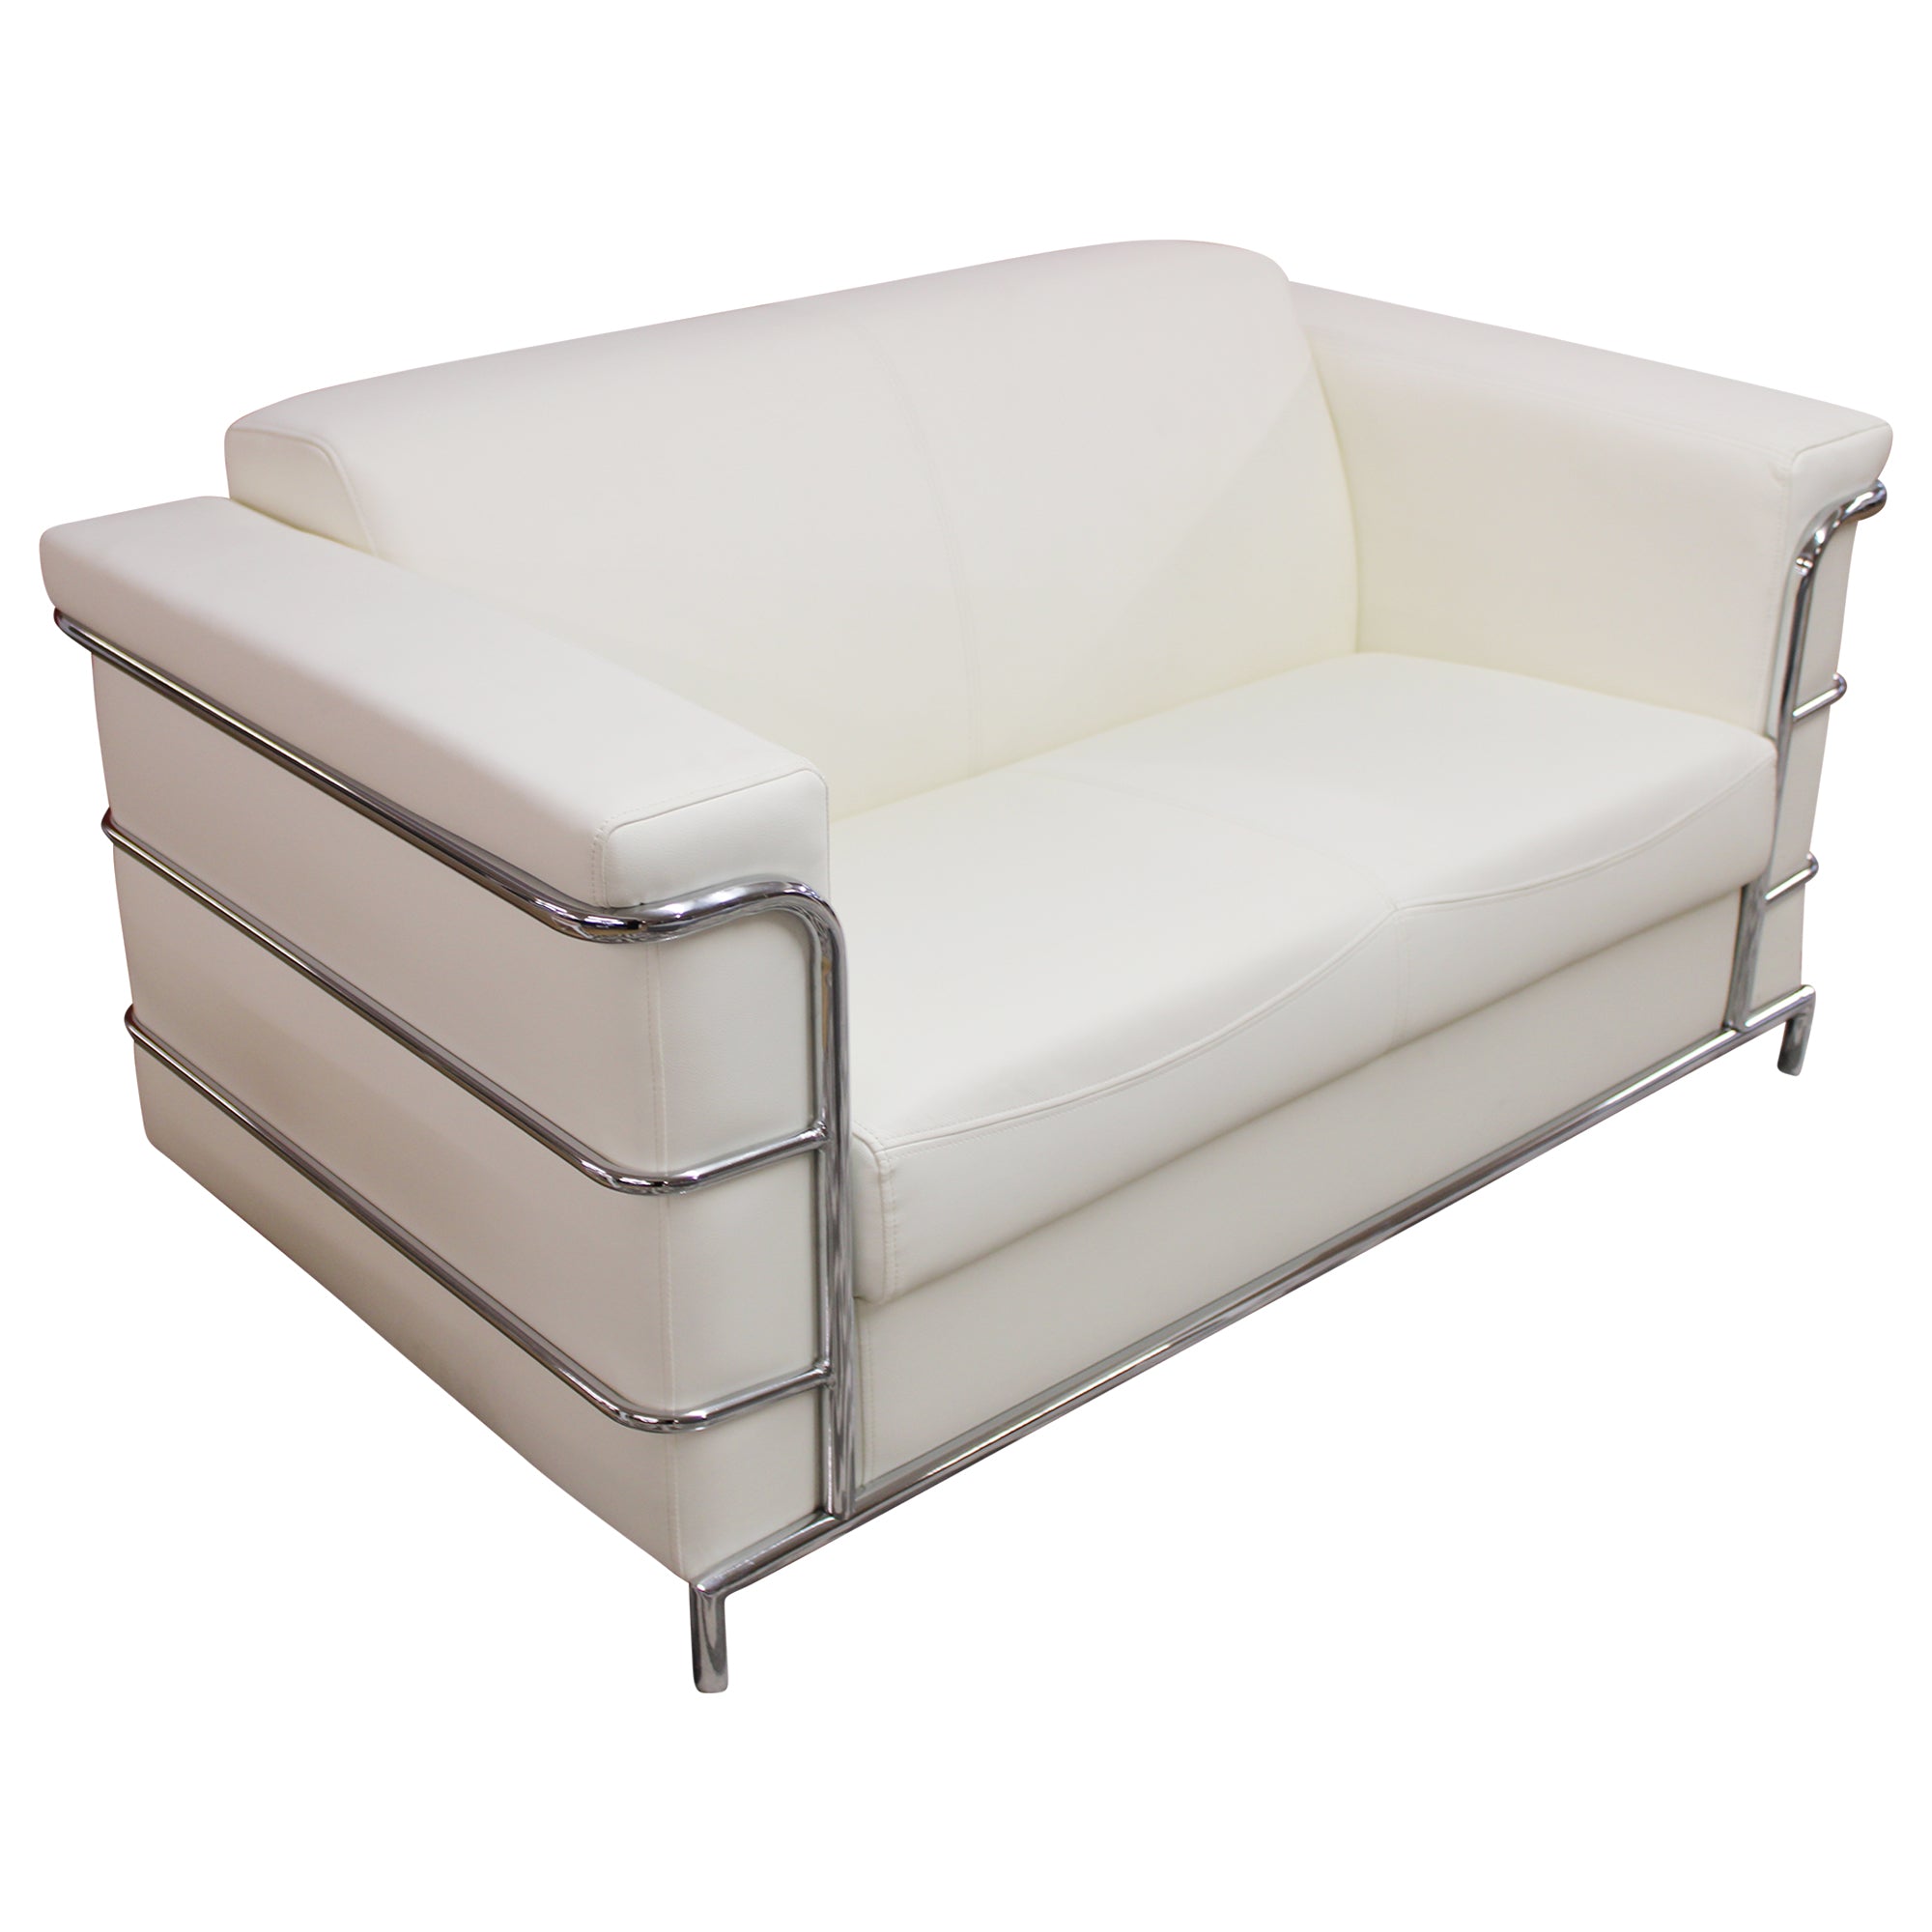 Compel Zia Lounge 2 Seat Sofa, White - New CLOSEOUT